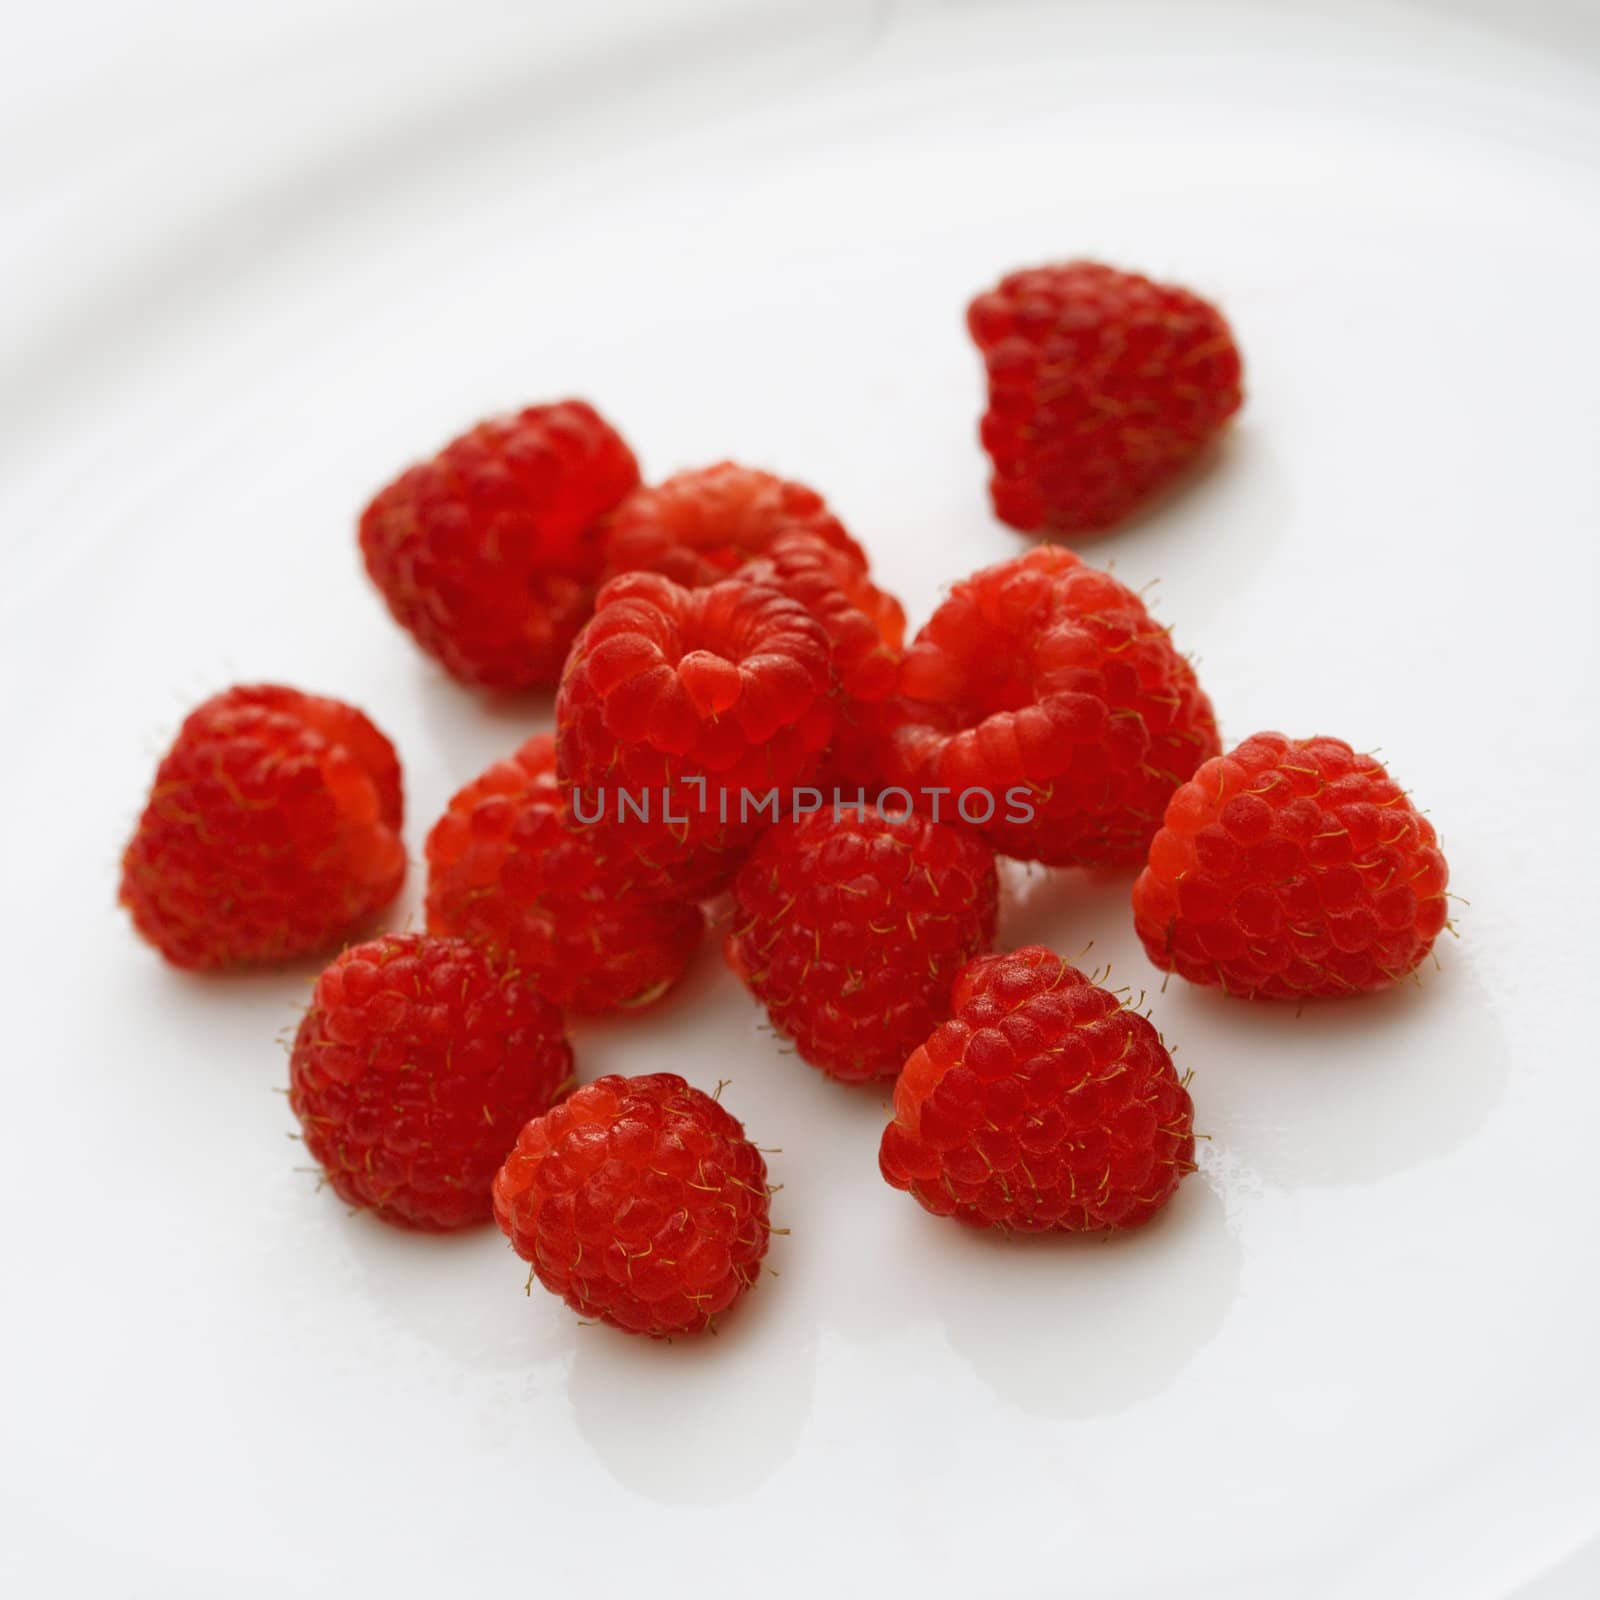 Red raspberries on white background.